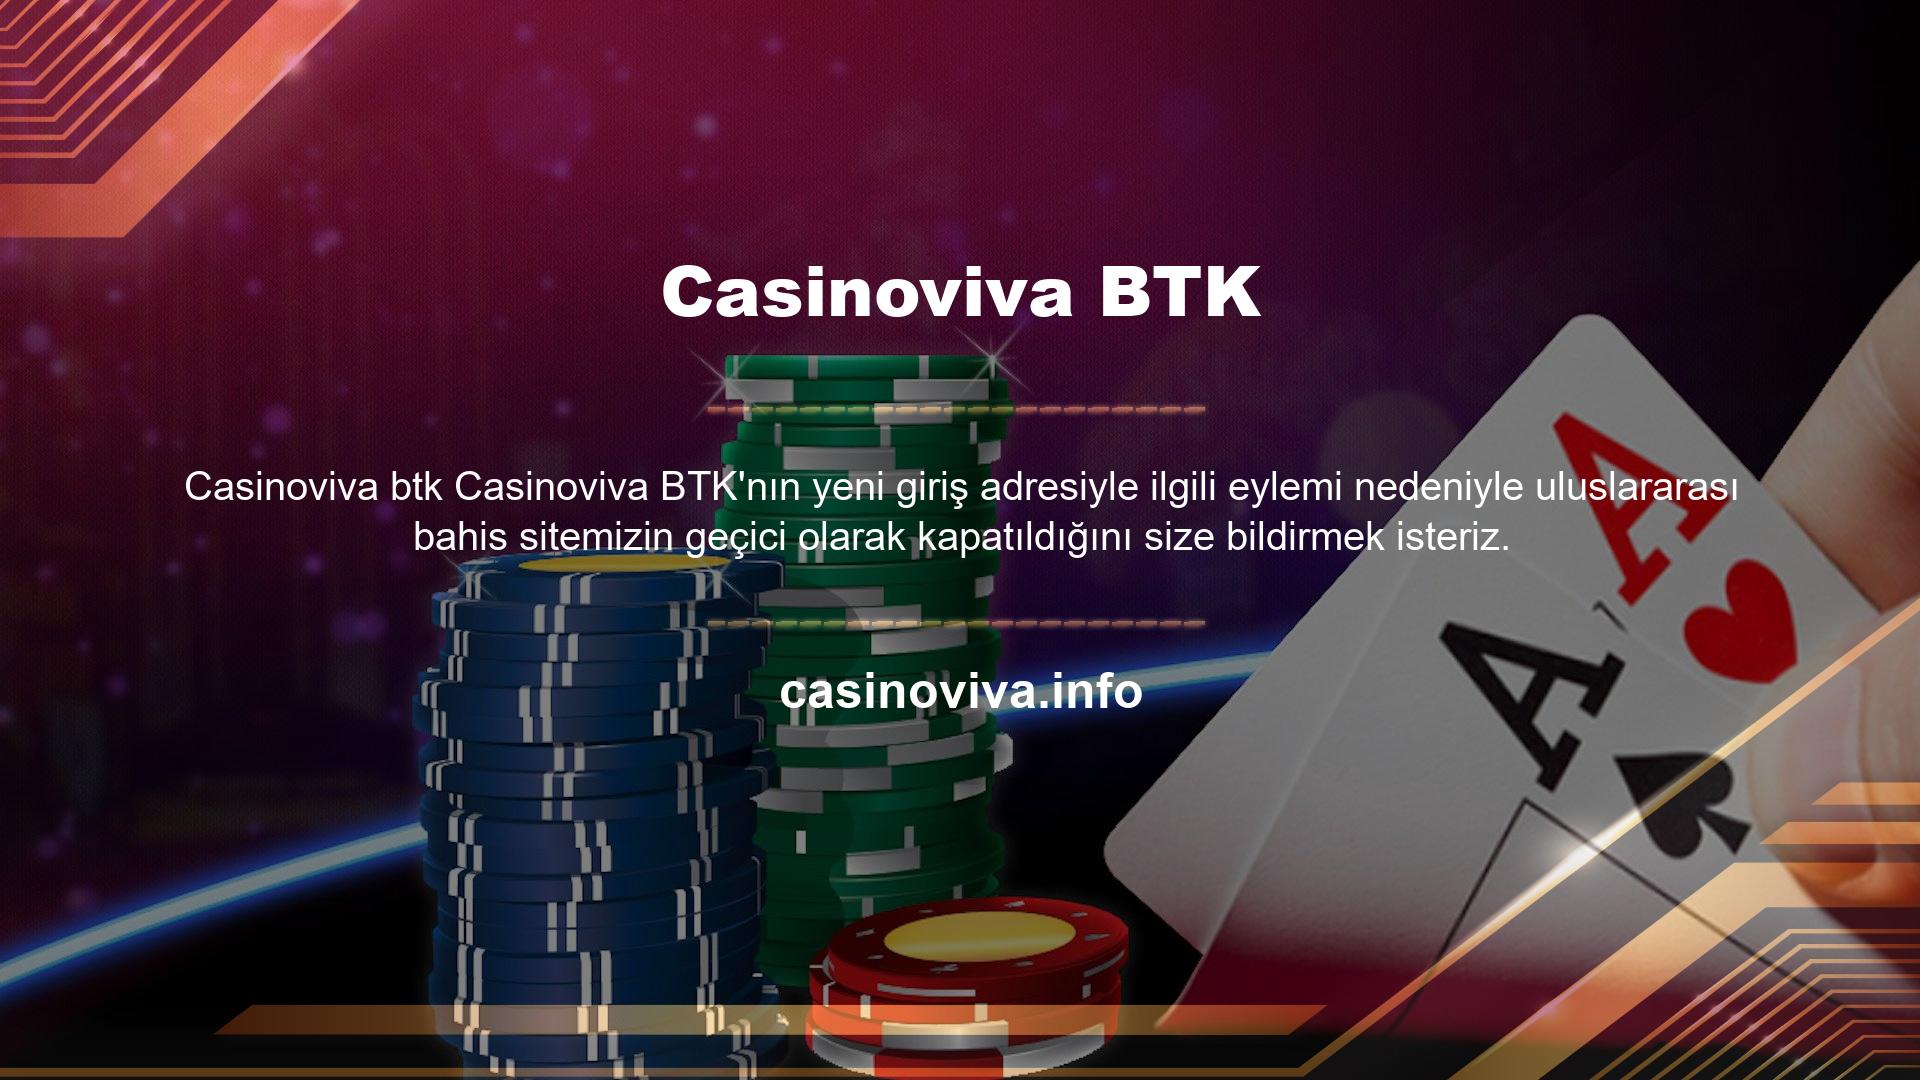 Casinoviva BTK